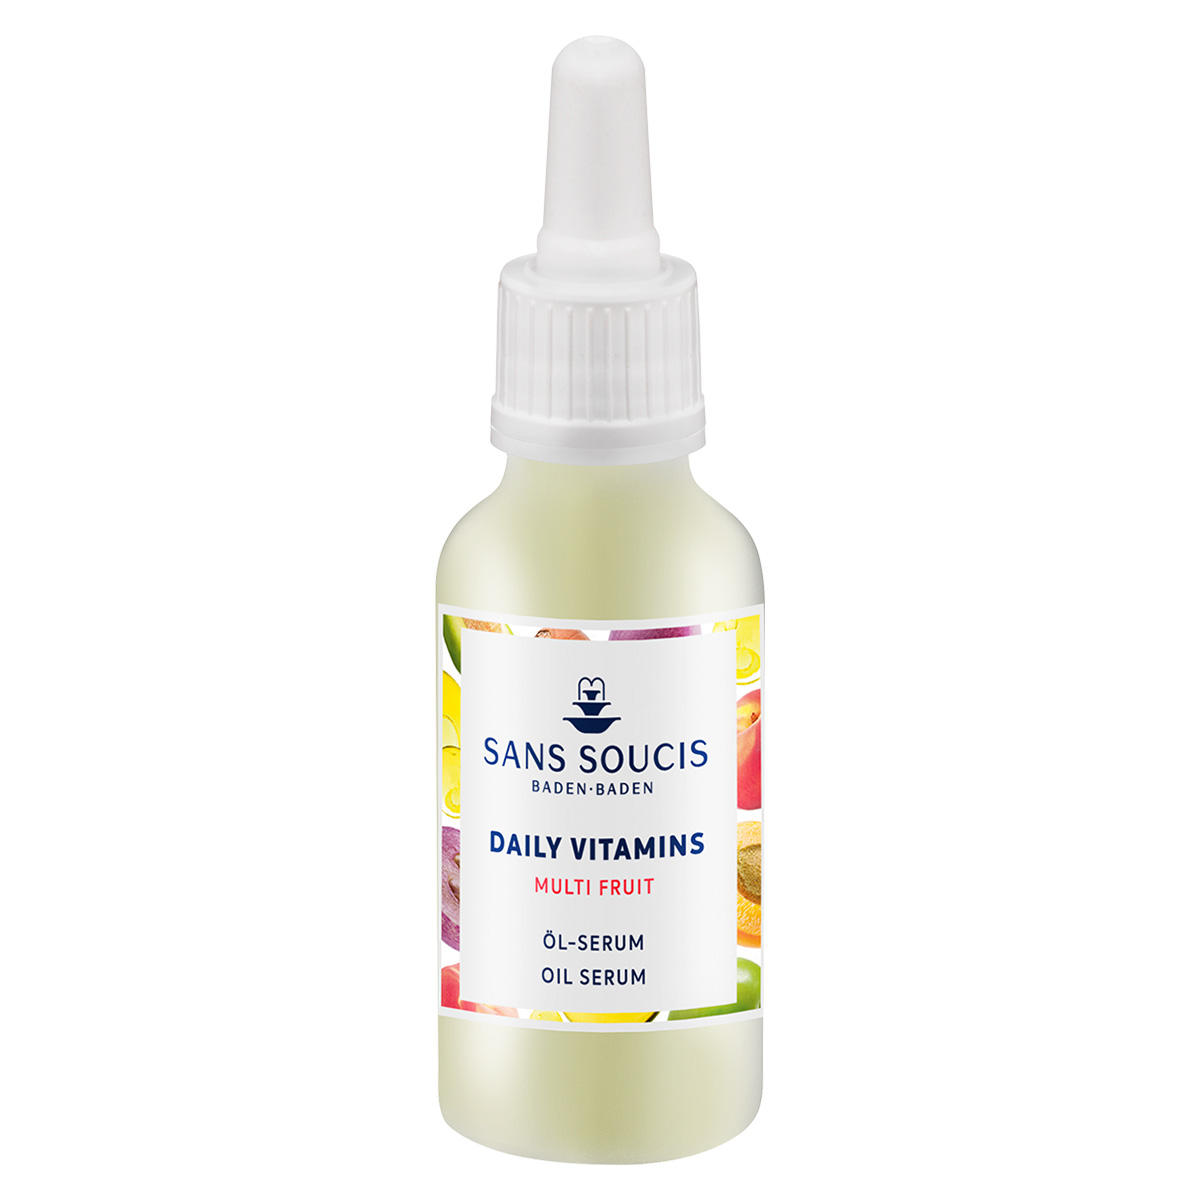 SANS SOUCIS DAILY VITAMINS Oil Serum 30 ml - 1